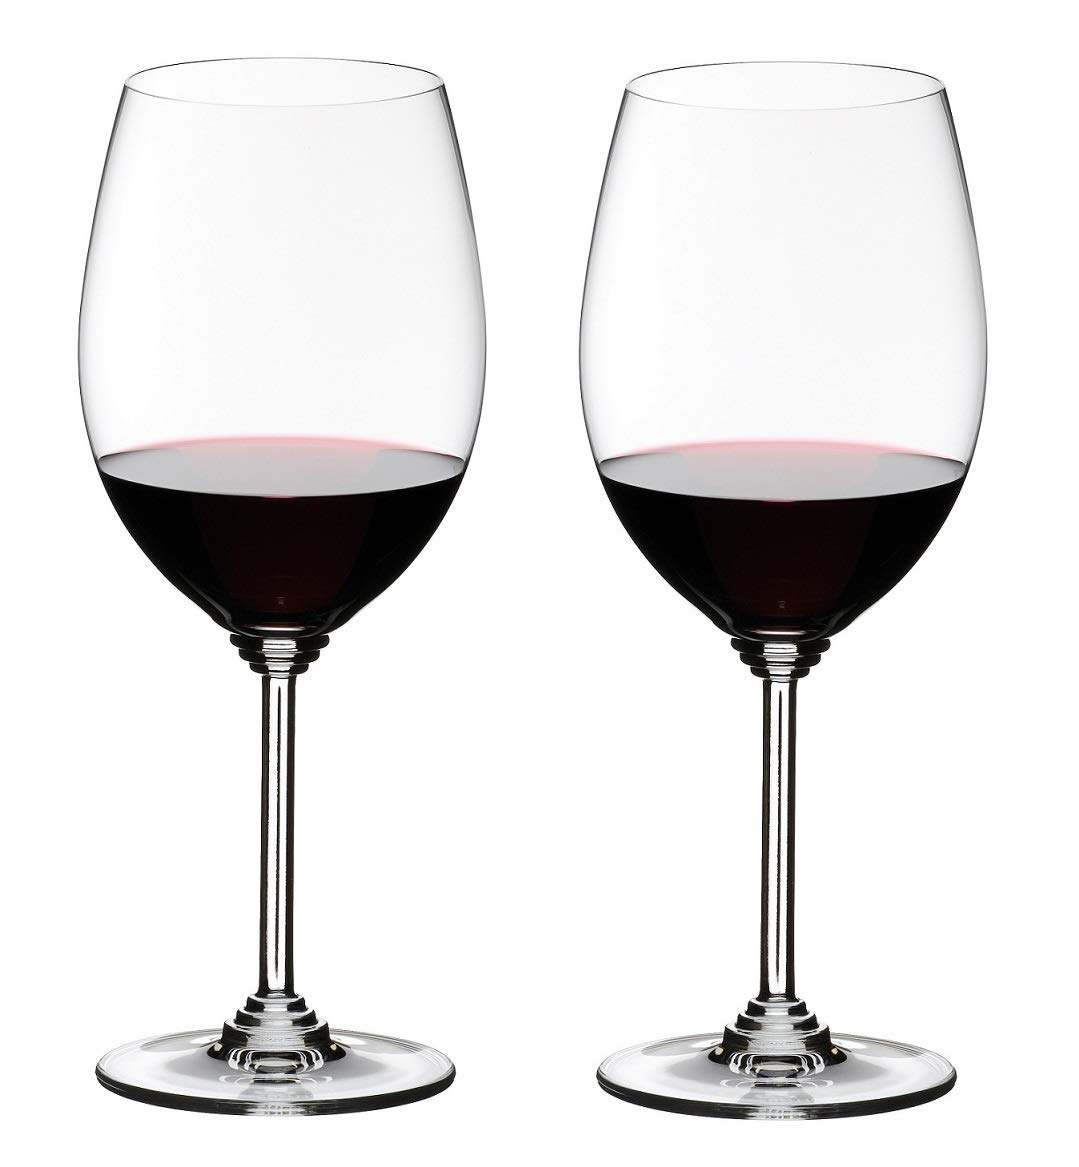 https://www.decormonk.com/wp-content/uploads/2019/12/Cabernet-Wine-Glass.jpg